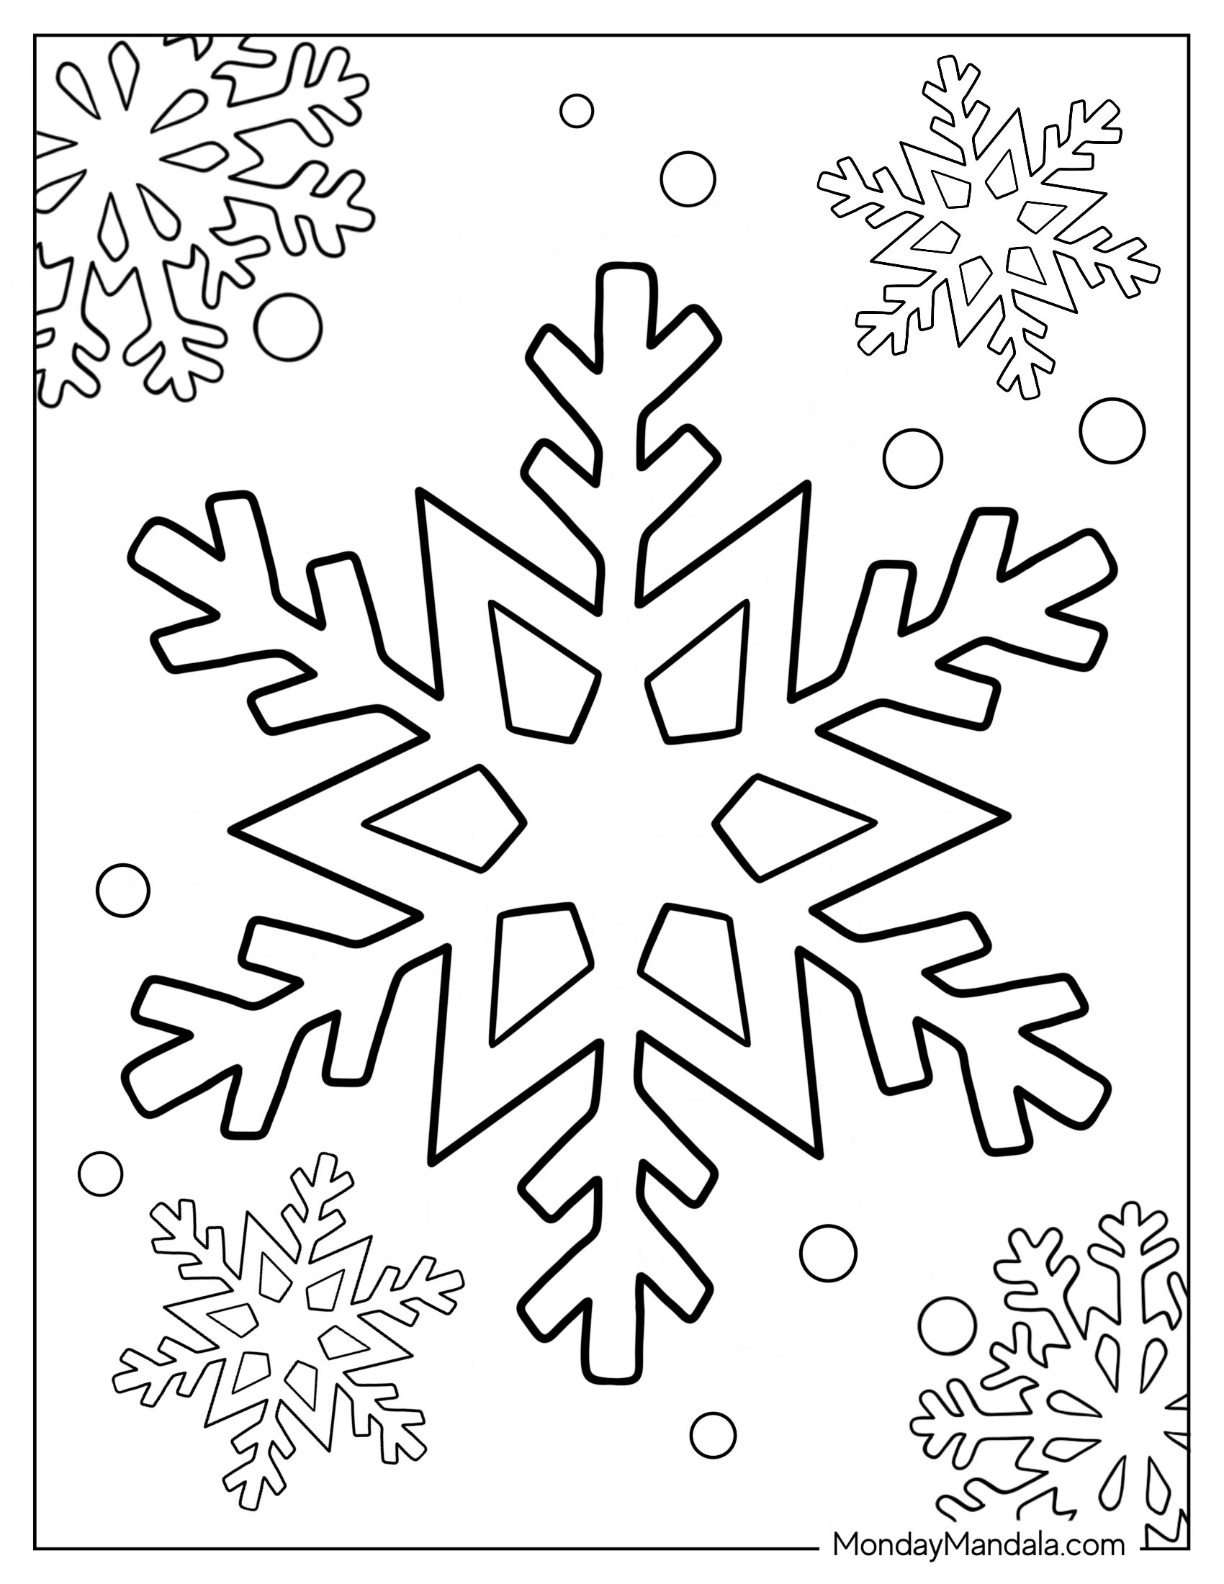 Snowflake coloring pages free pdf printables